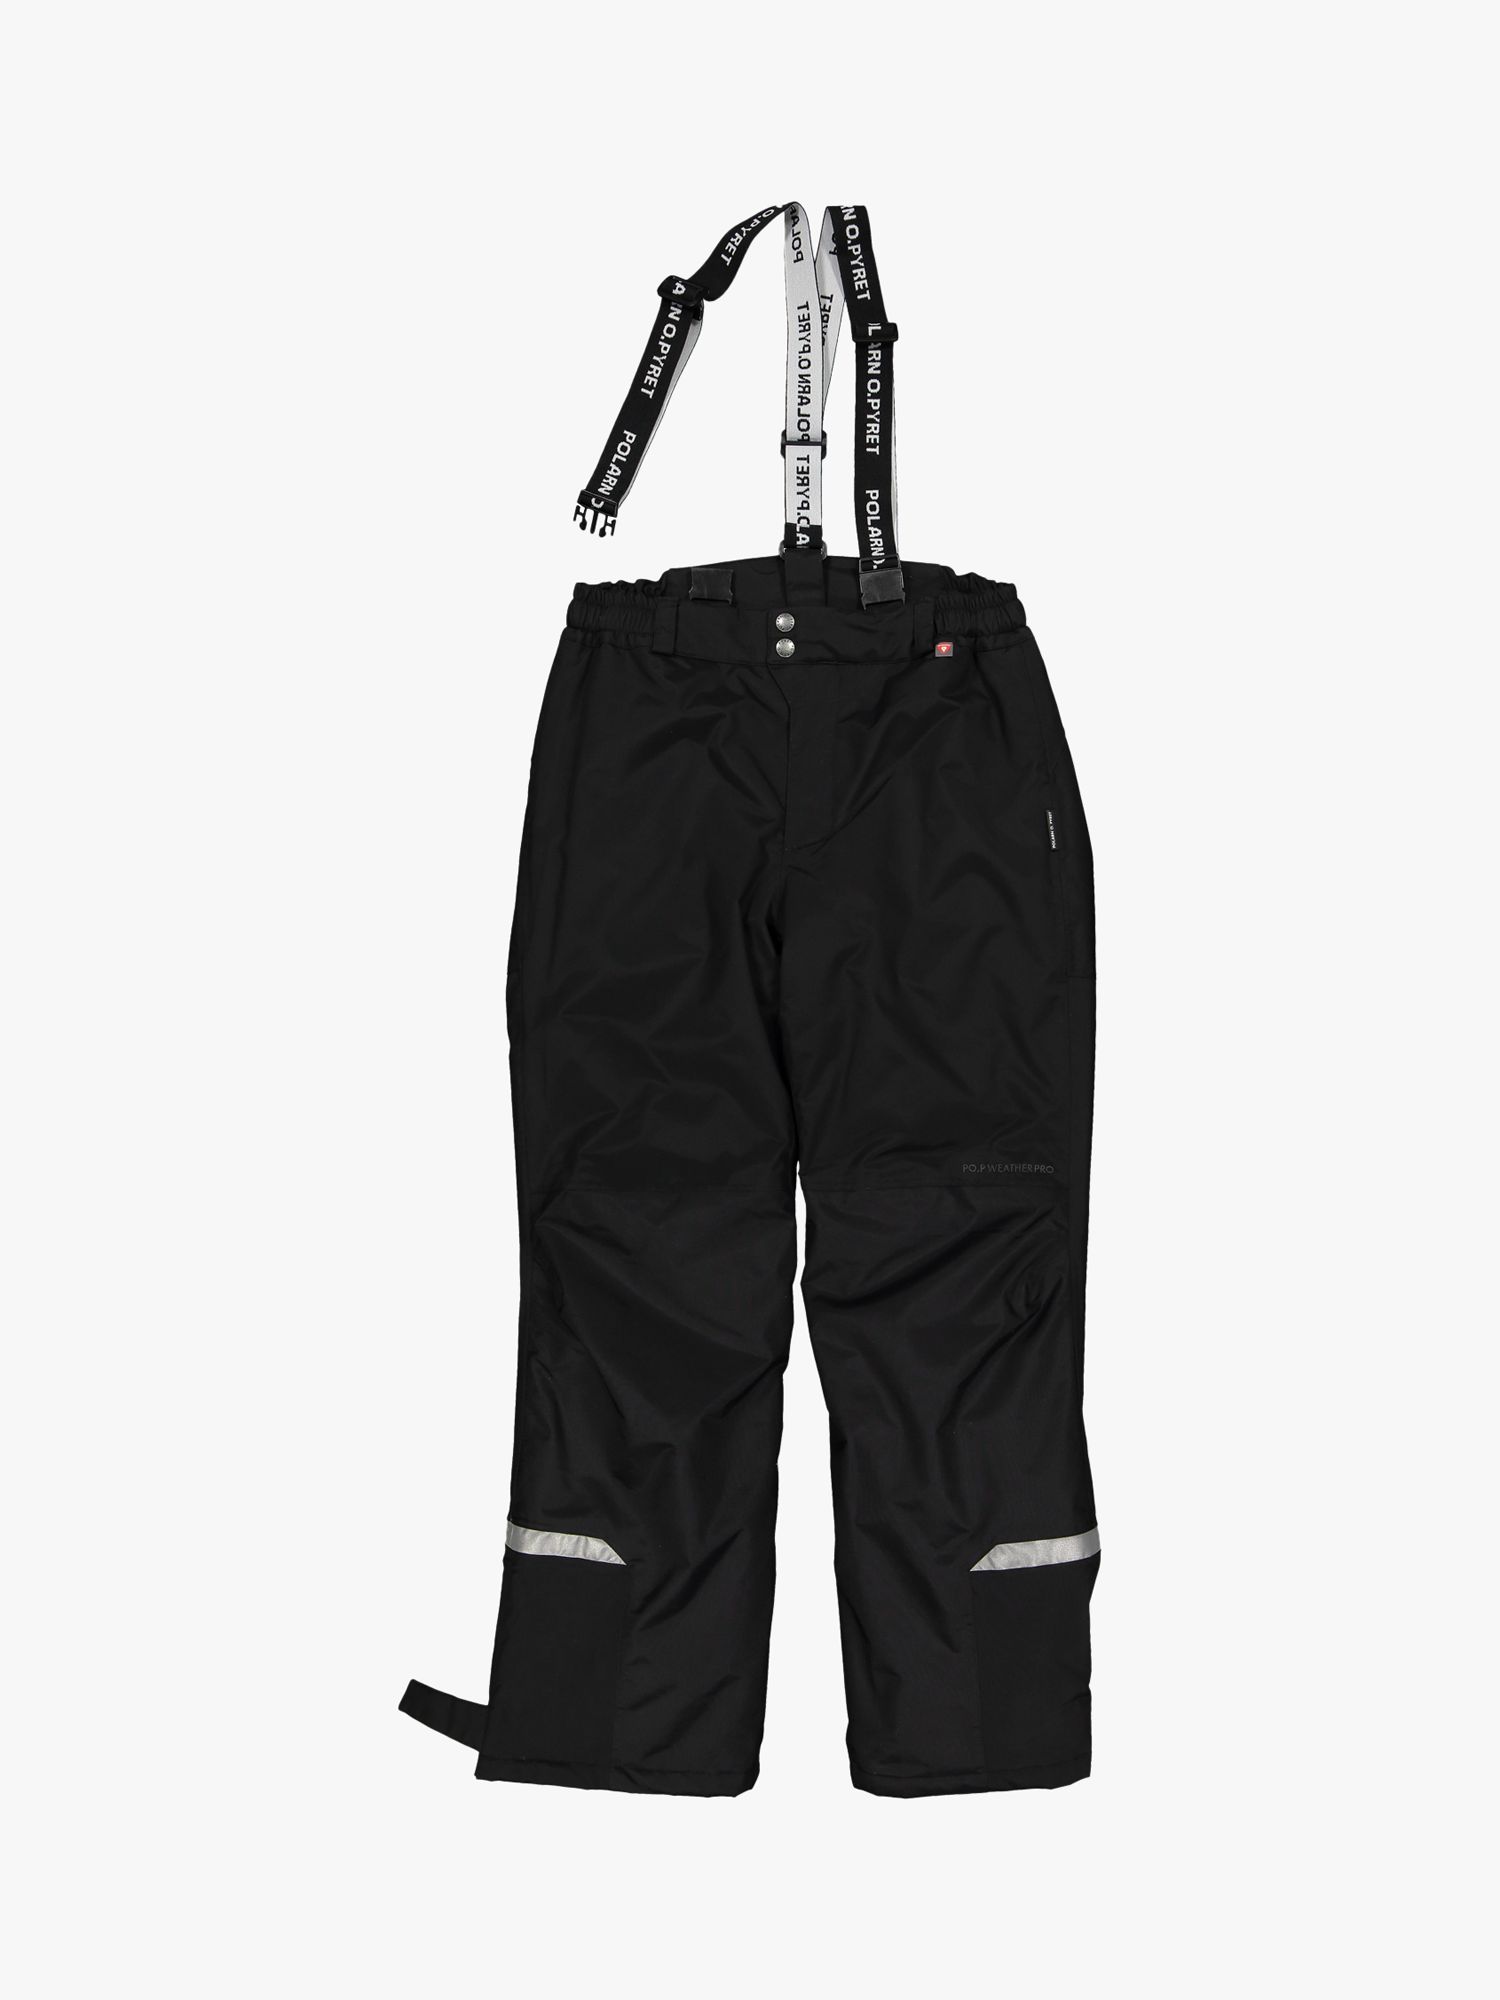 Polarn O. Pyret Kids' Padded Wind & Waterproof Shell Trousers, Black, 2-3 years